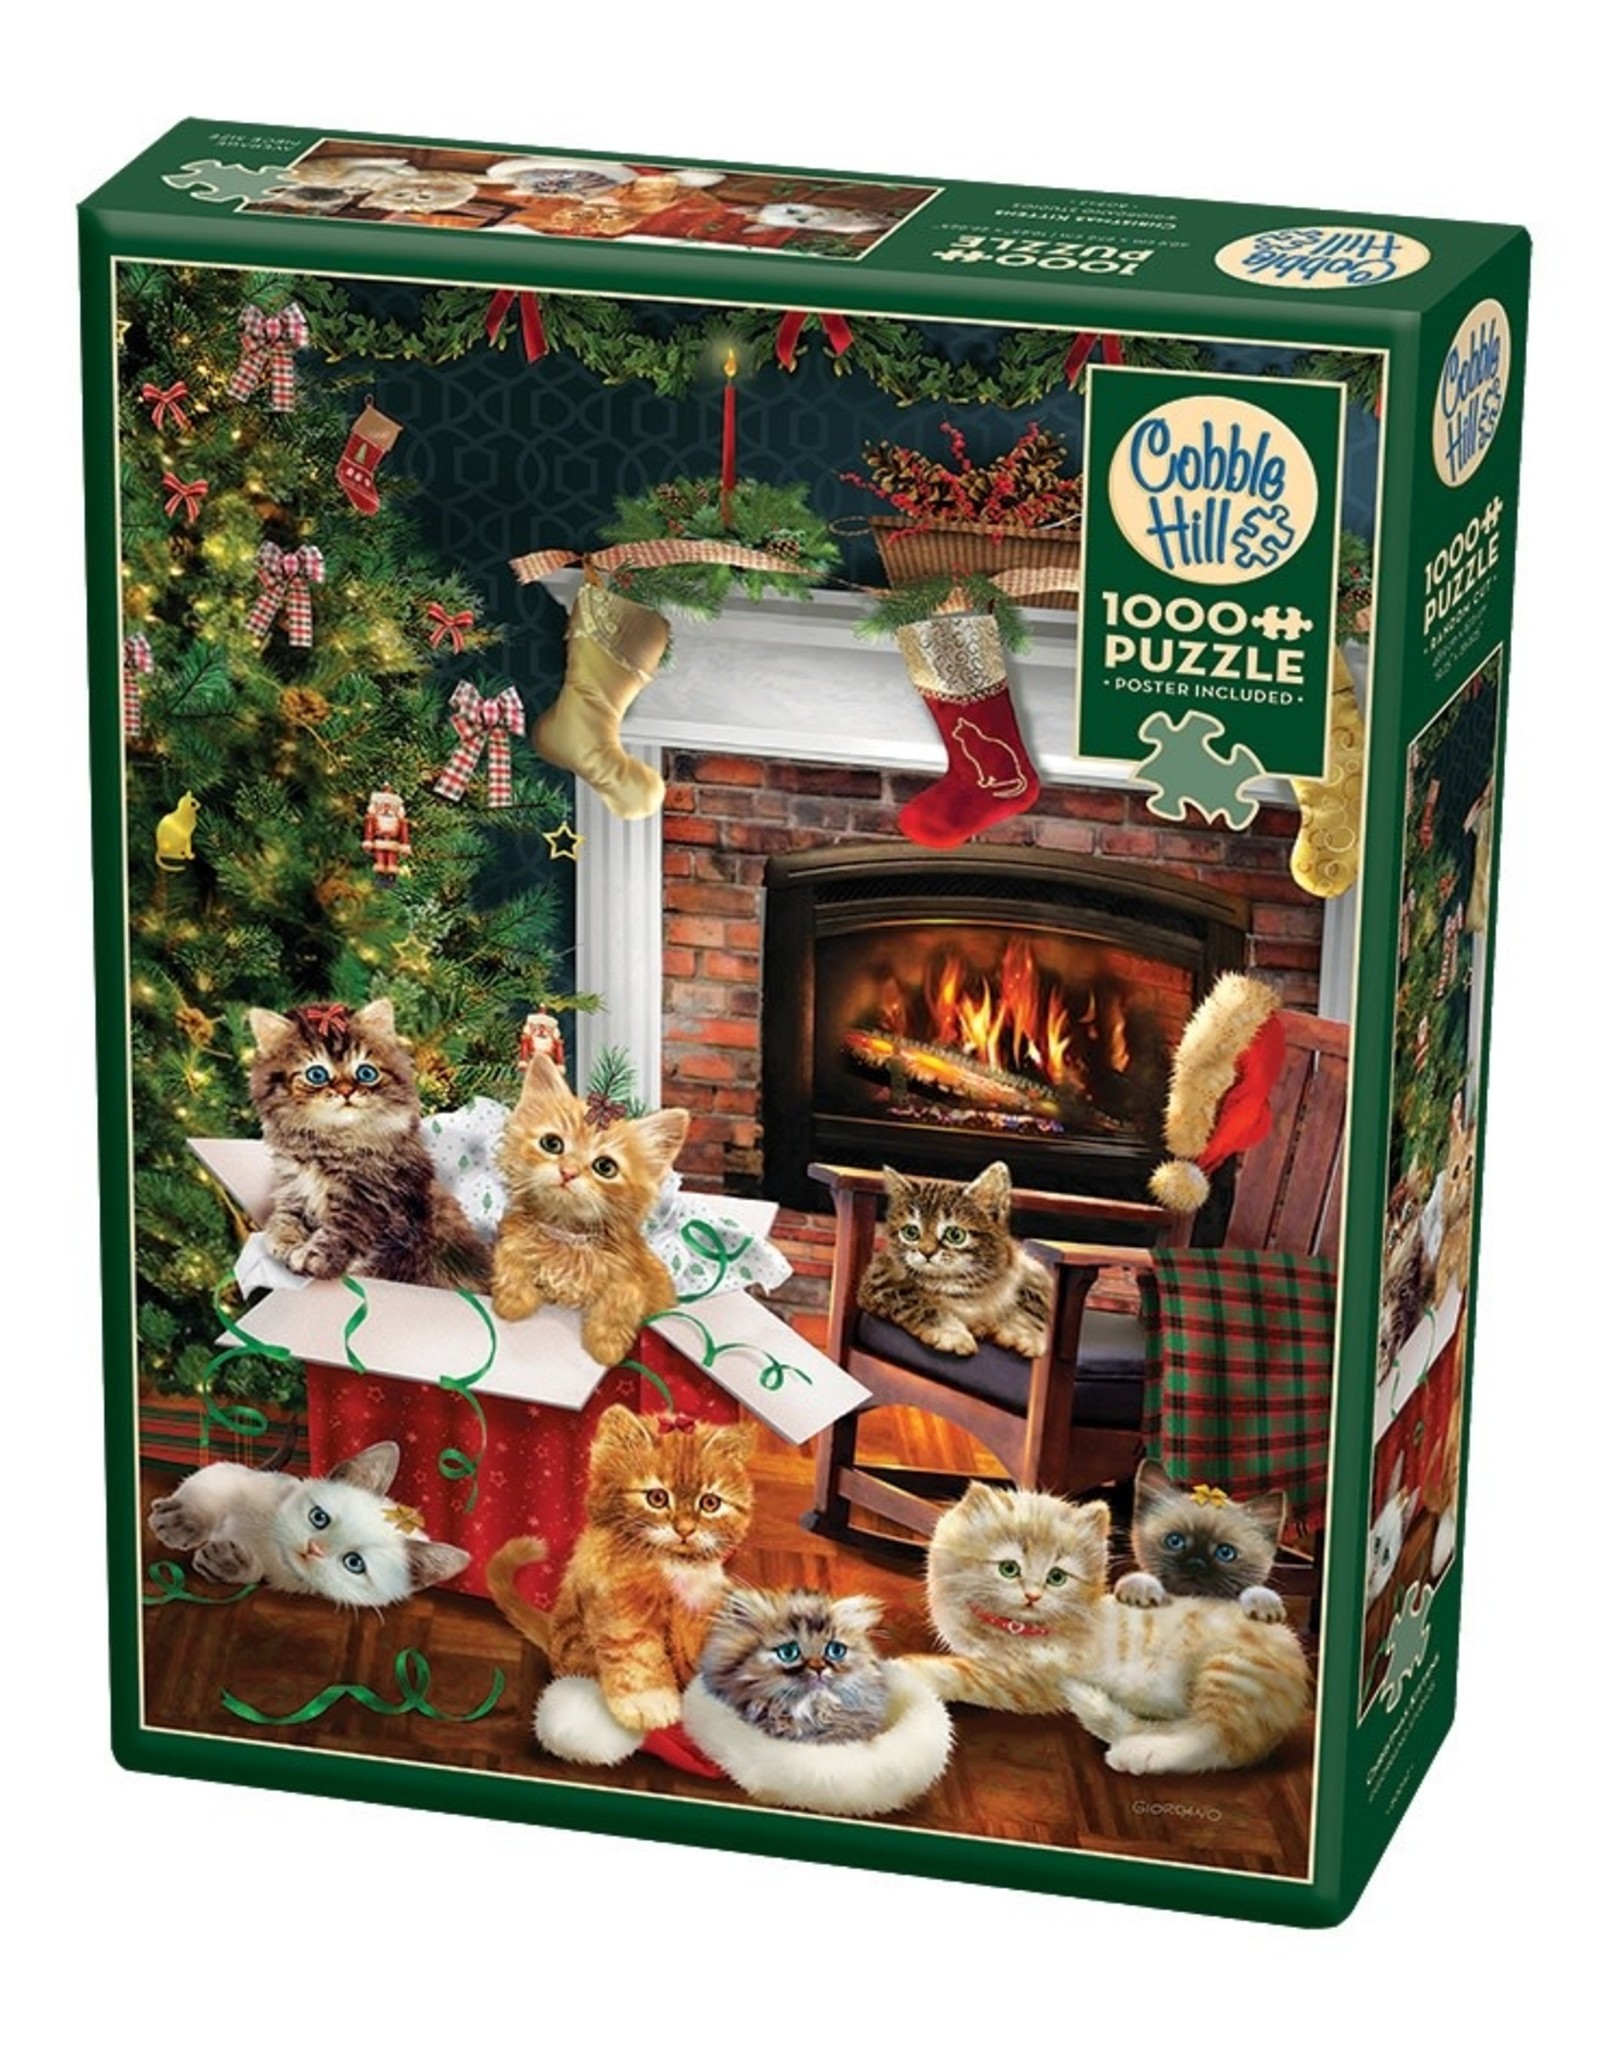 Cobble Hill Cobble hill 1000P puzzle - Christmas kittens